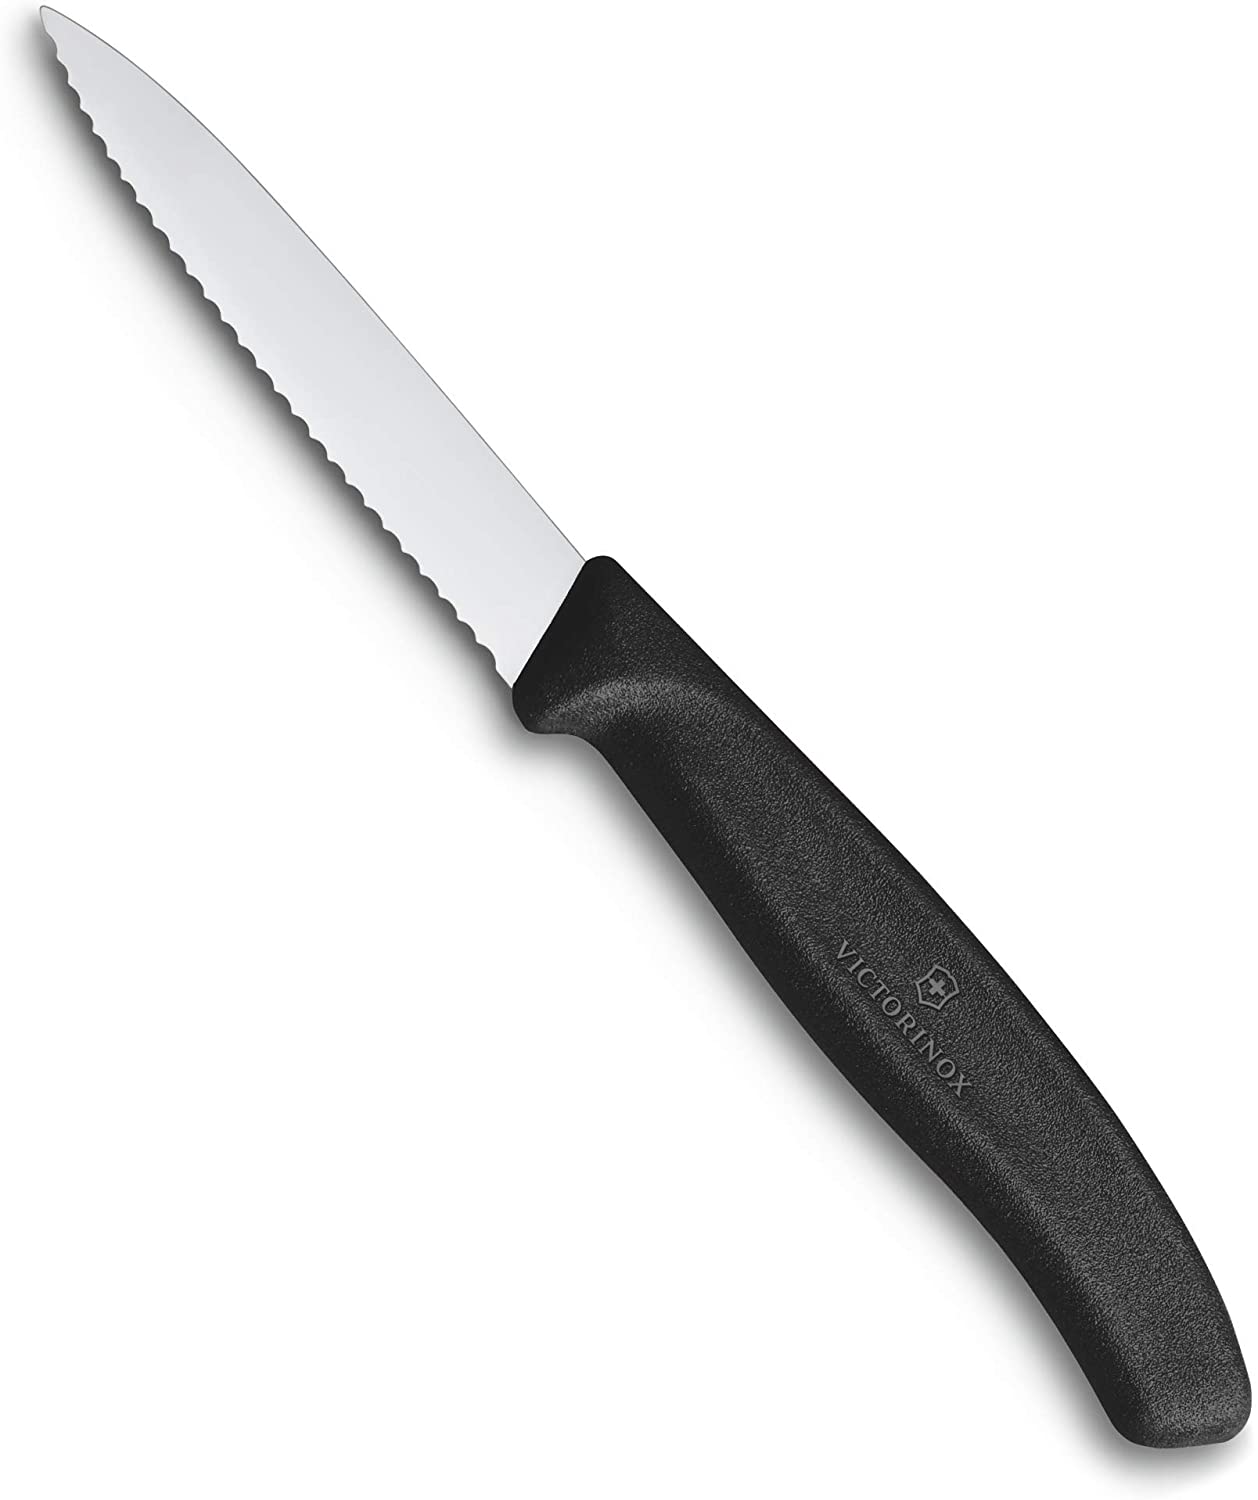 Victorinox kitchen knife 19 cm Swiss Classic, extra sharp serrated edge, ergonomic handle, dishwasher-safe, black